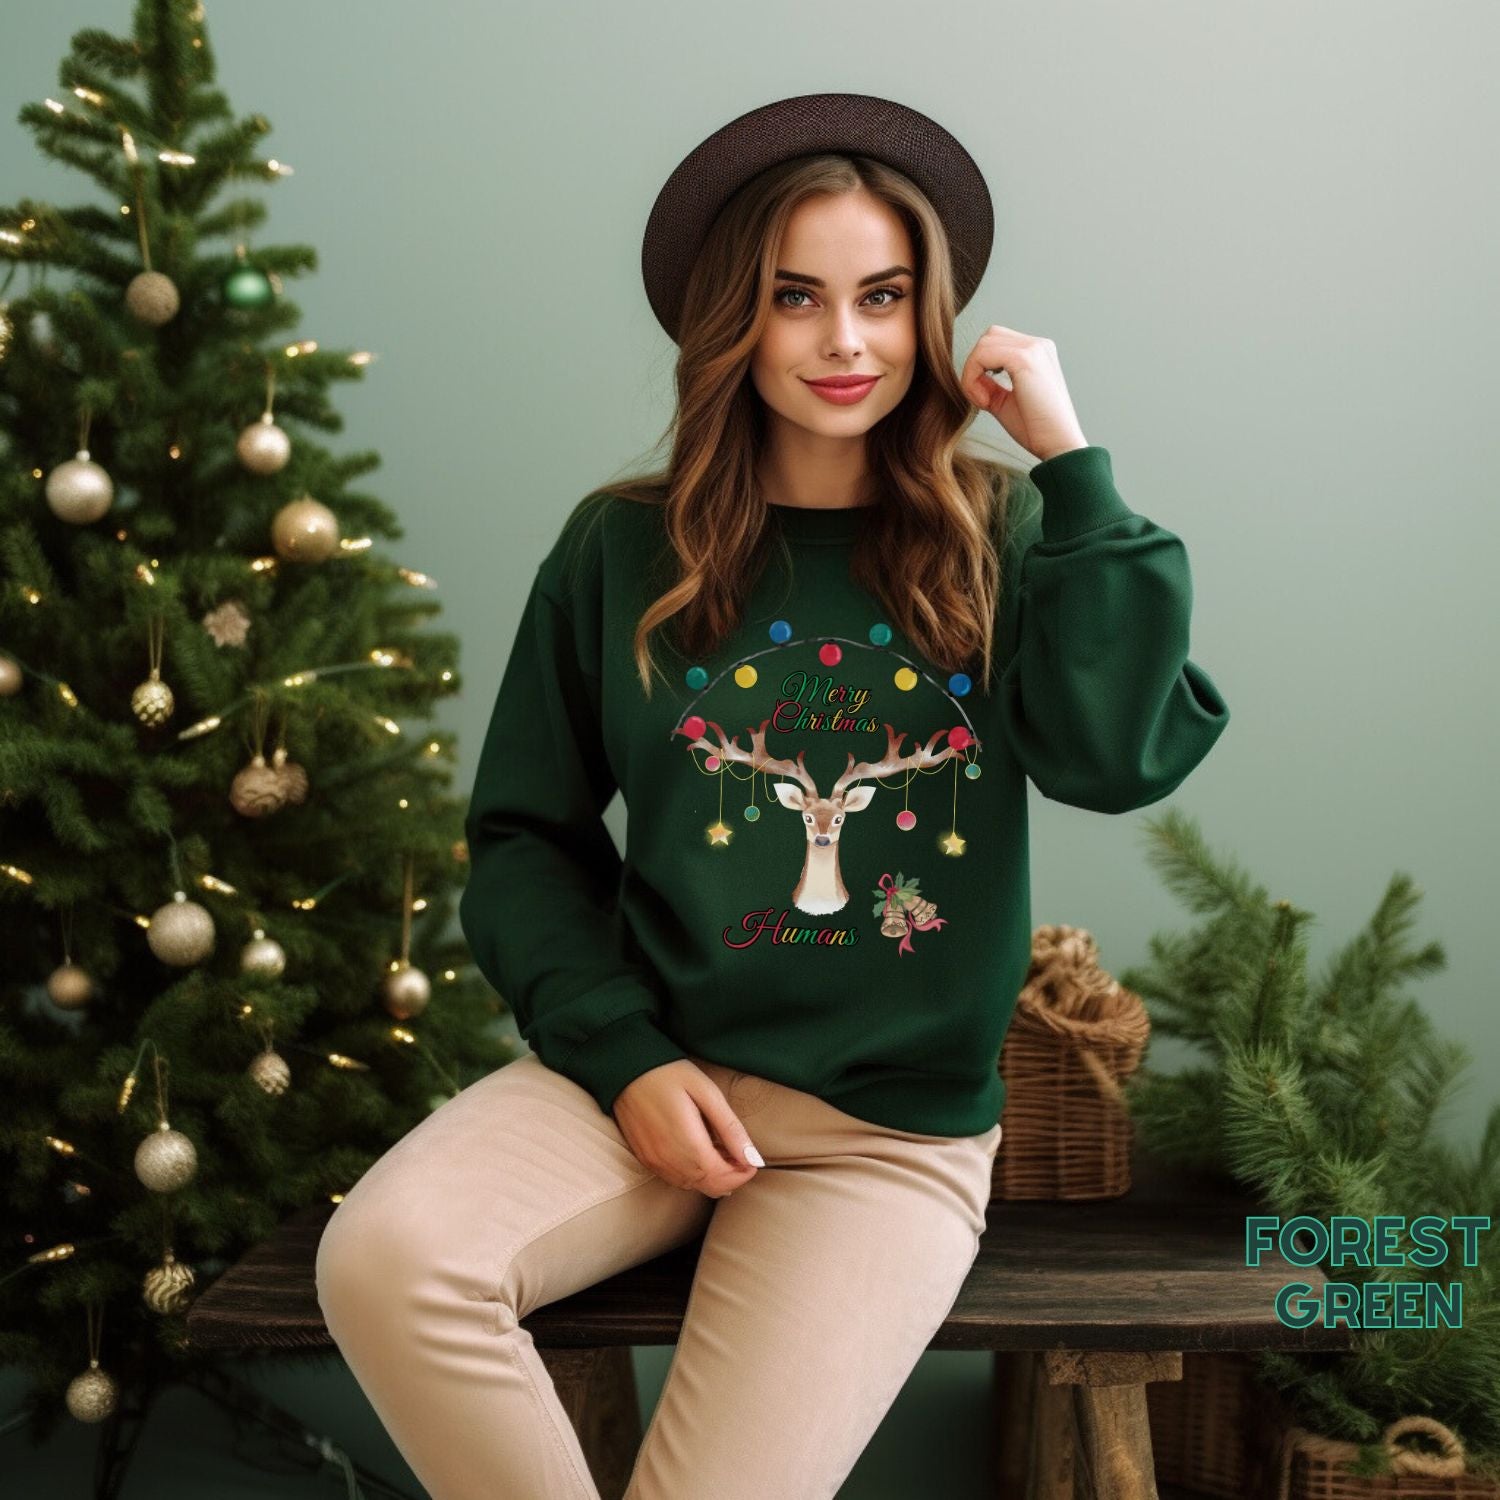 Merry Christmas Reindeer Sweatshirt - Christmas Crewneck for Festive Holiday Cheer | 'Merry Christmas Humans' Sweatshirt   